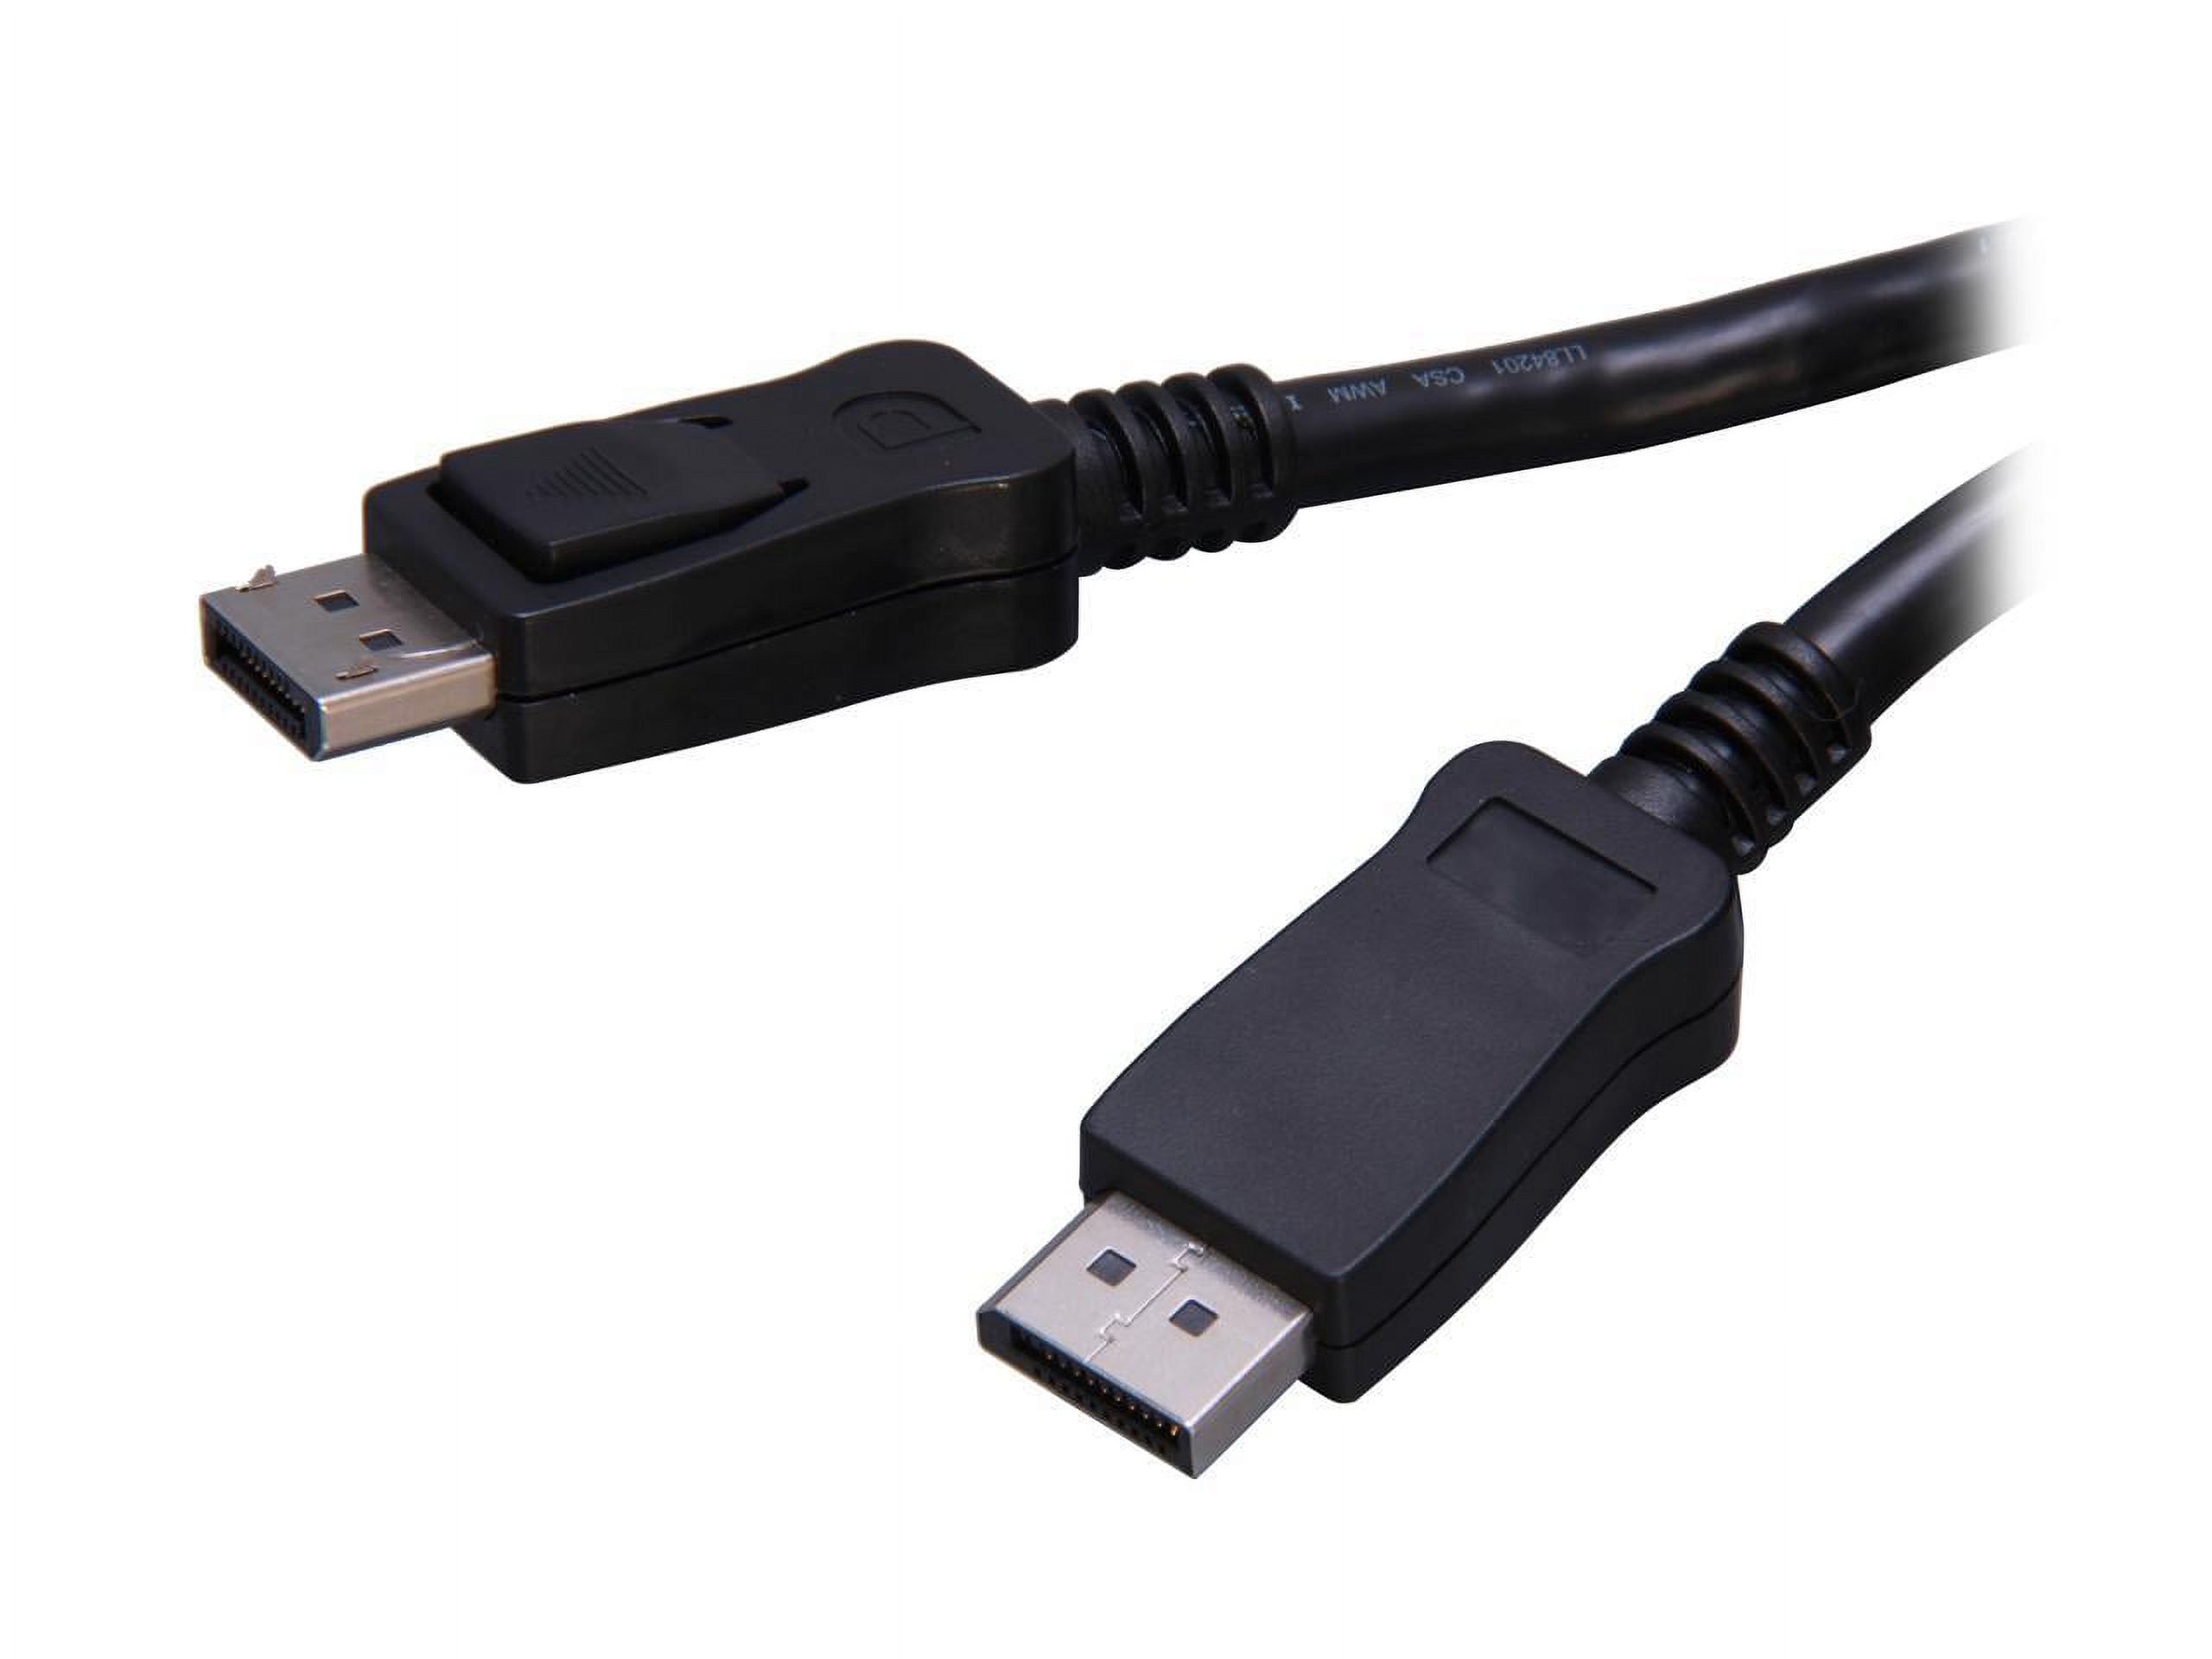 StarTech.com DISPLPORT15L DisplayPort Cable - 15 ft. - with Latches - 4K DisplayPort to DisplayPort Cable - DP Cable - DisplayPort 1.2 Cable - image 1 of 3